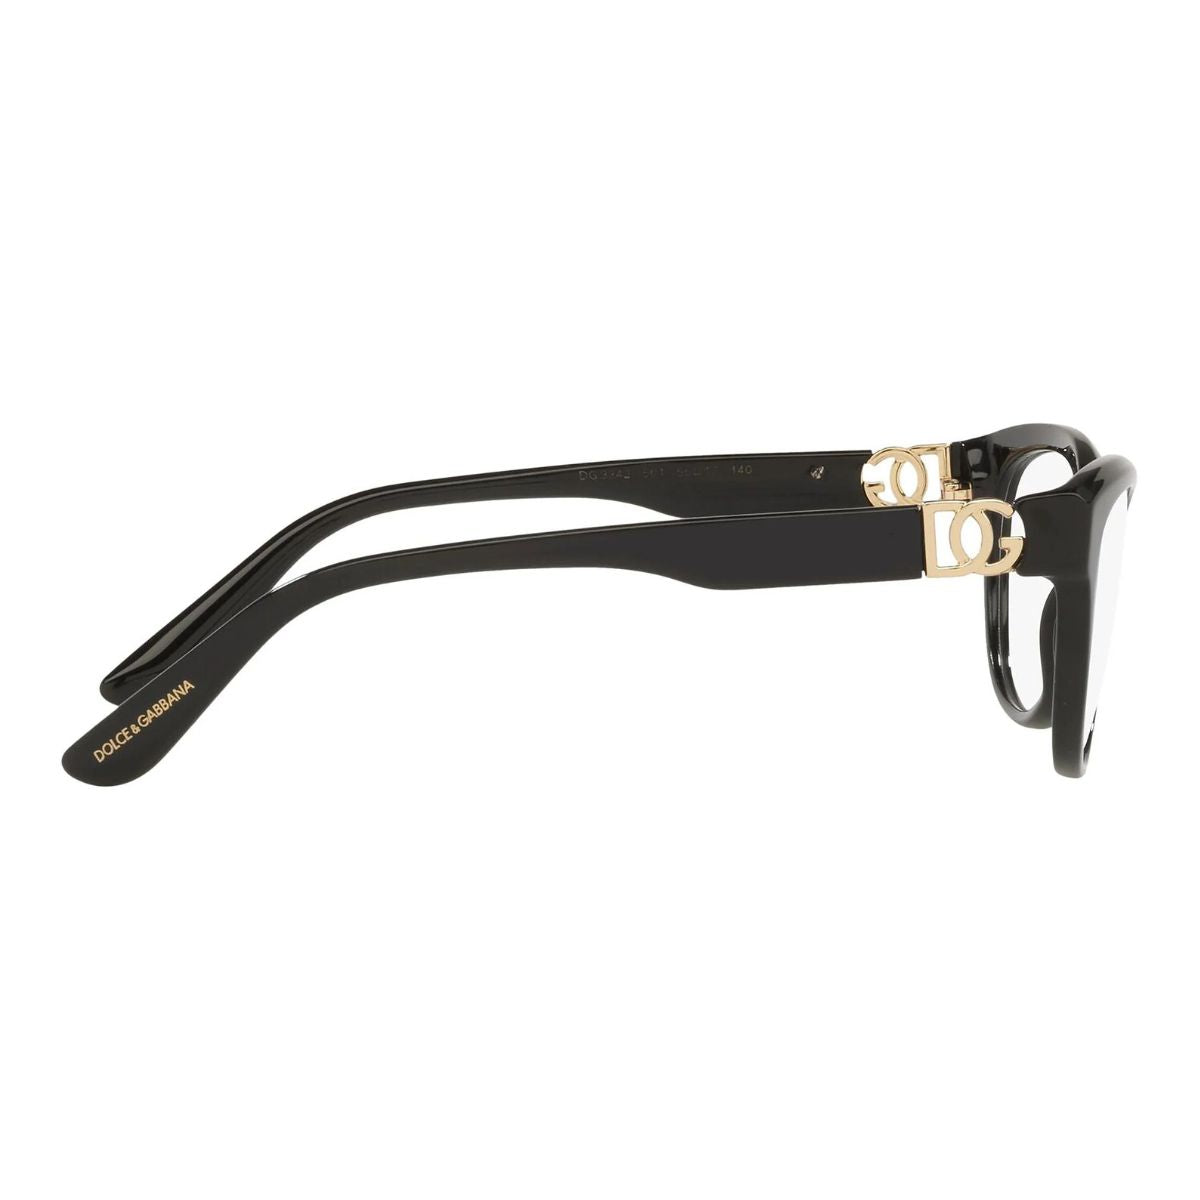 "buy Dolce&Gabbana 3342 501 presceiption eyewear frame for women's at optorium"